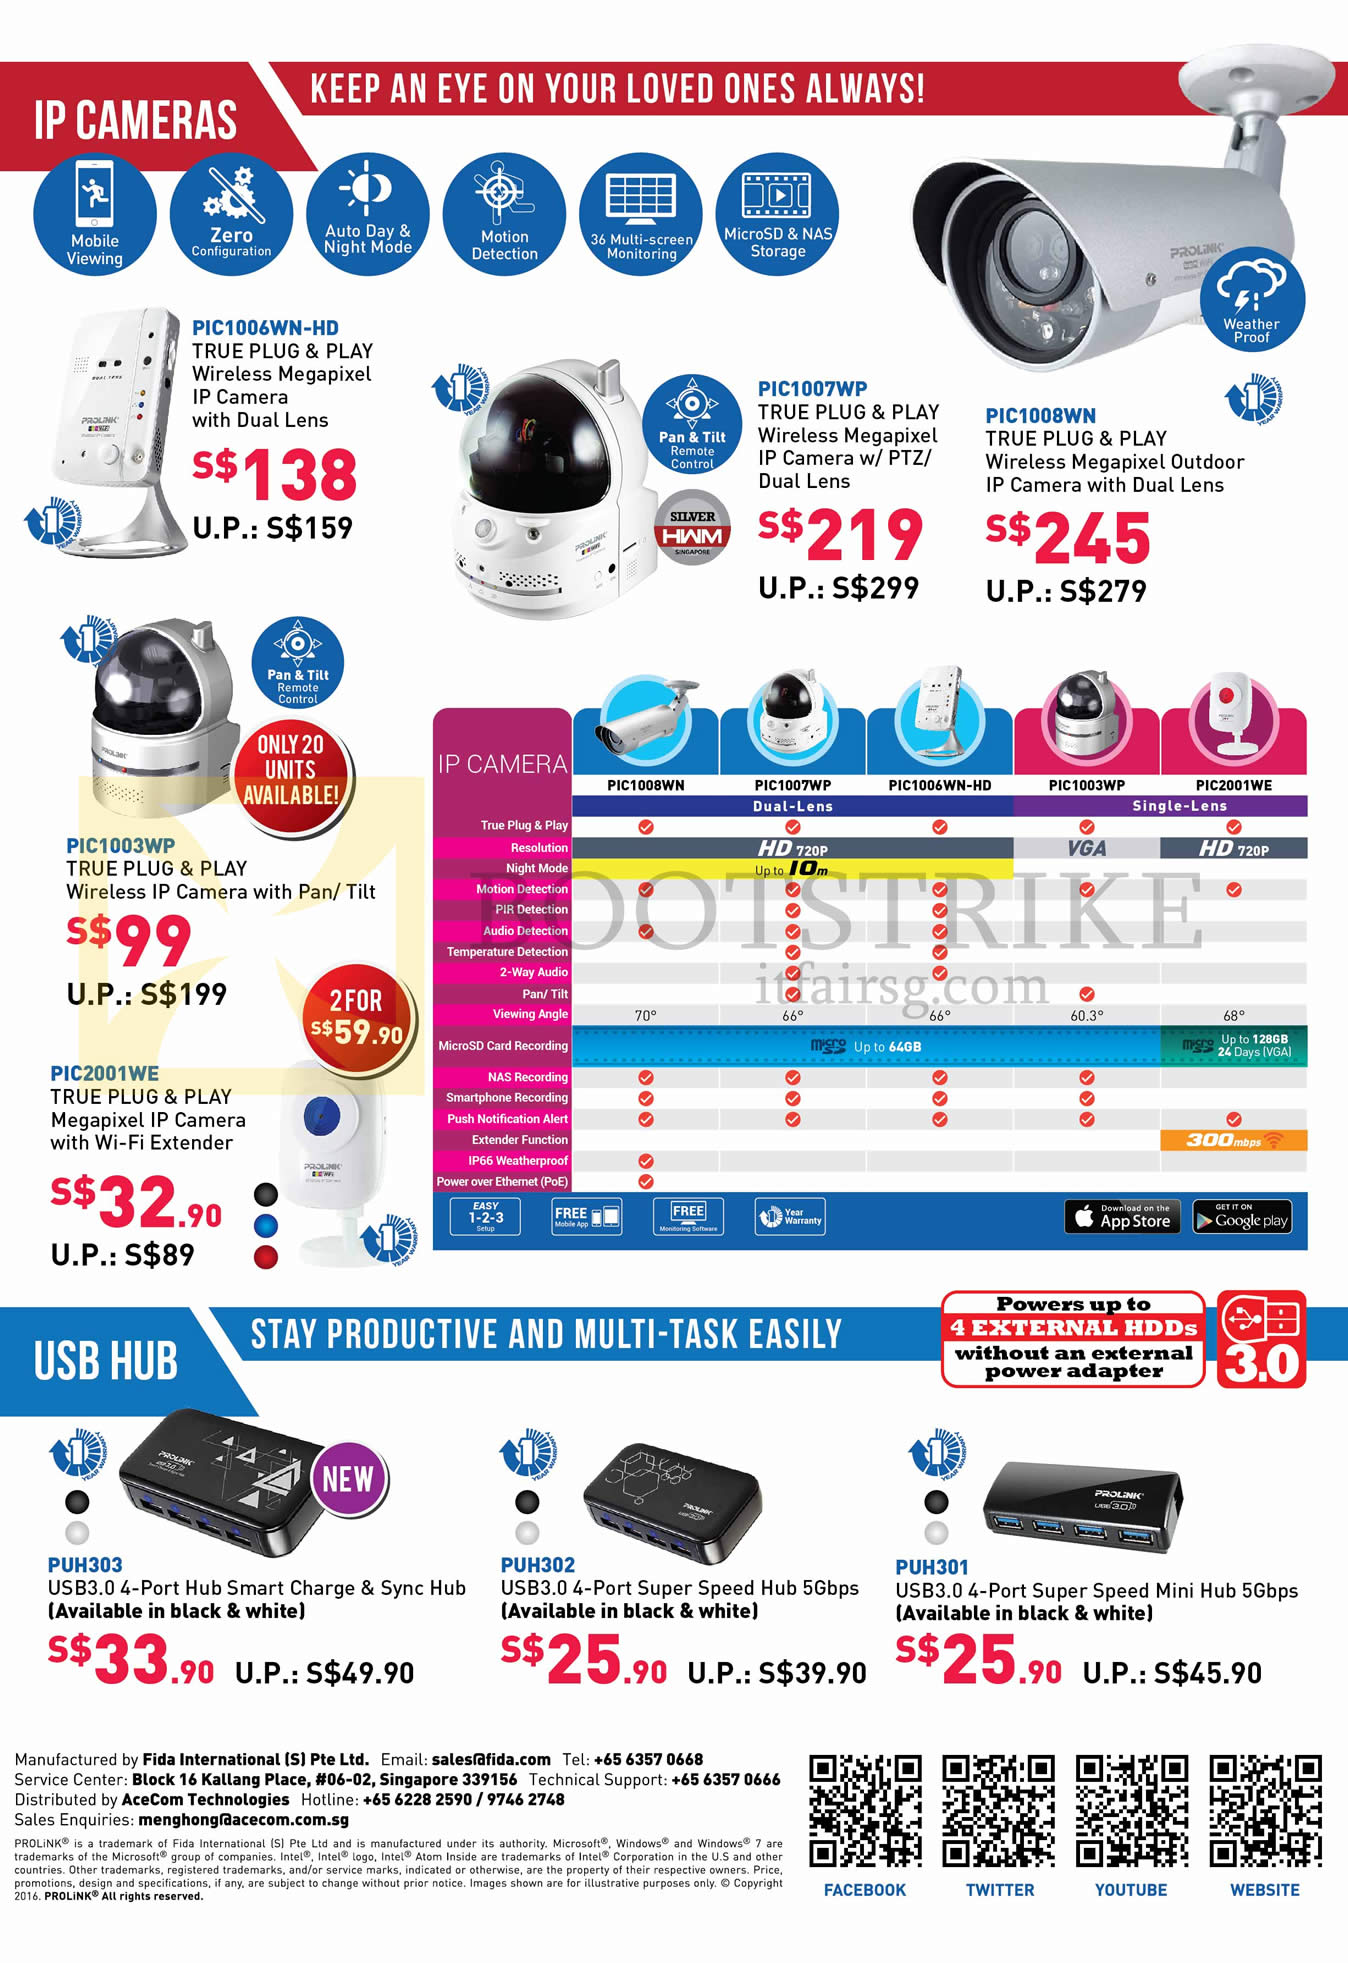 PC SHOW 2016 price list image brochure of Prolink IP Cameras, USB Hub, PIC1006WN-HD, 1007WP, 1008WN, 1003WP, 2001WE, PUH303, 302, 301